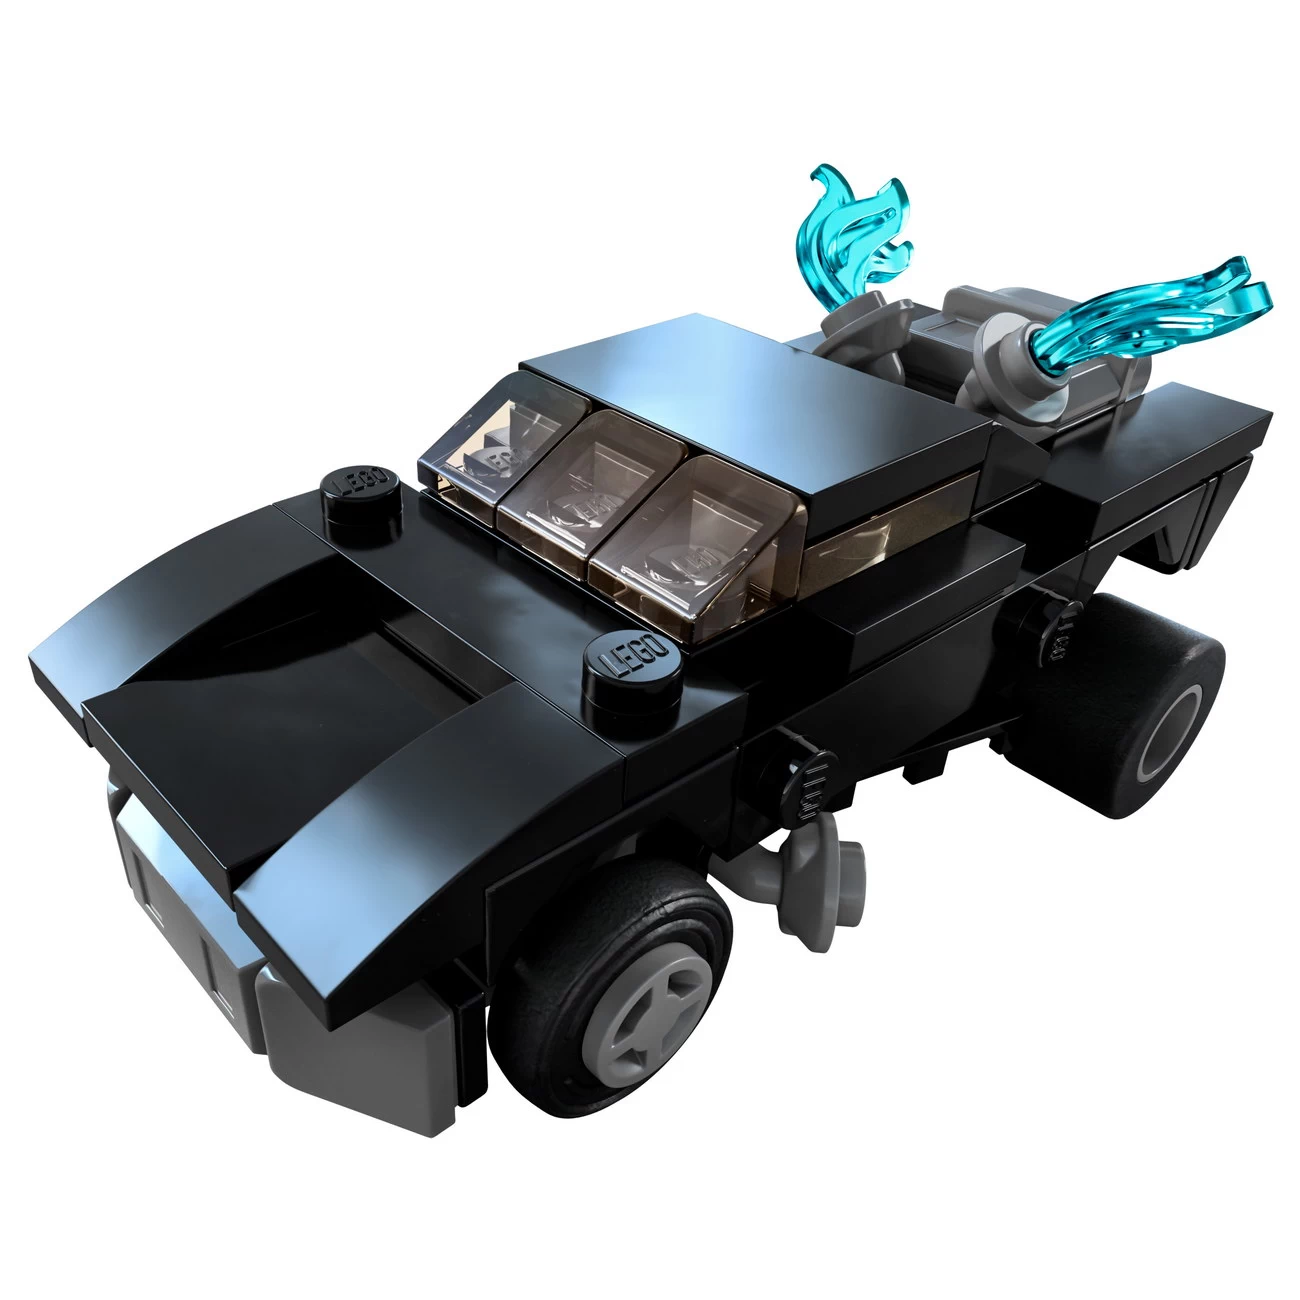 LEGO Batman 30455 - Batmobil - Polybag